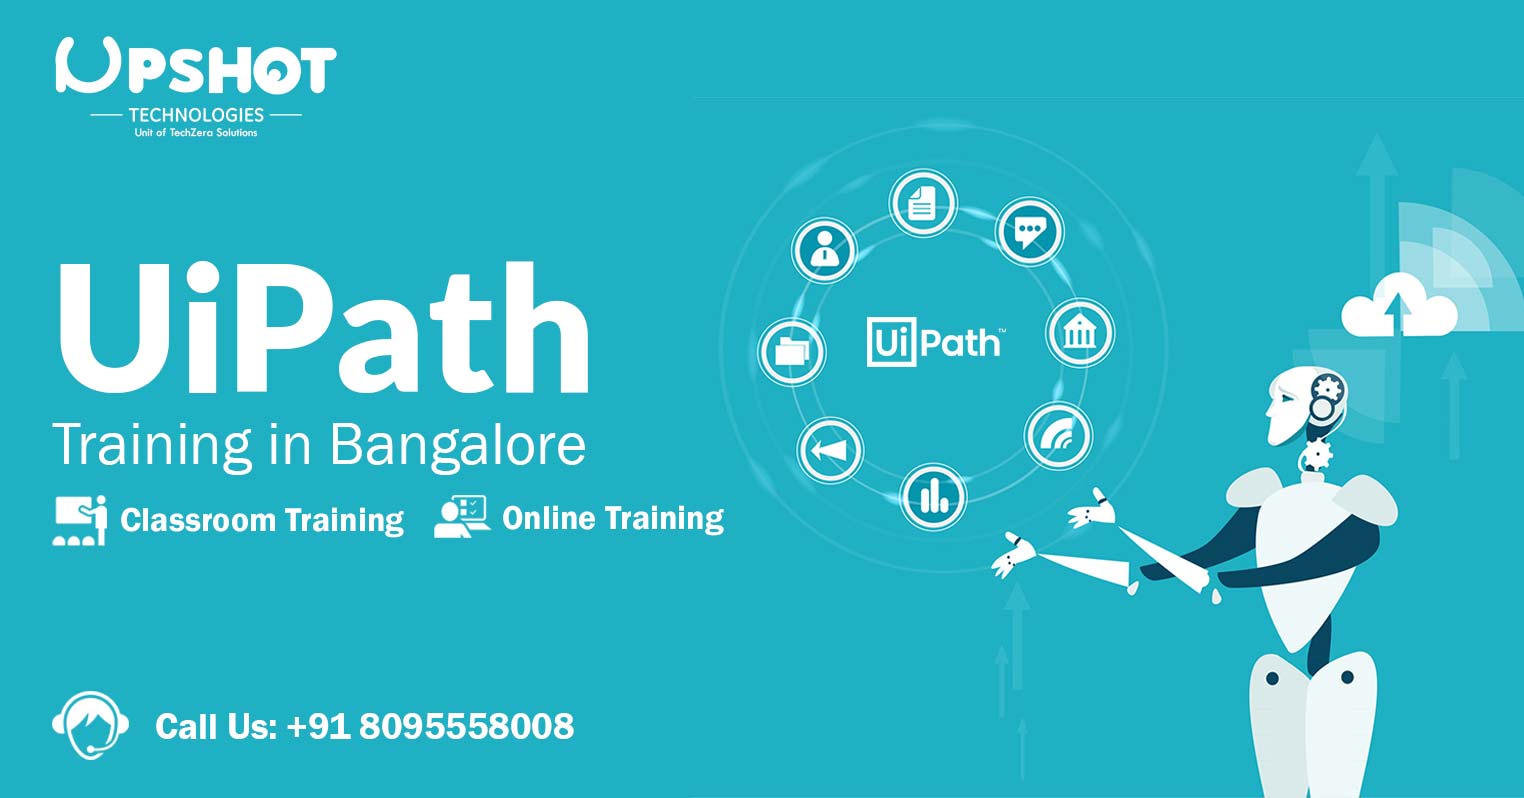 uipath Training in bangalore